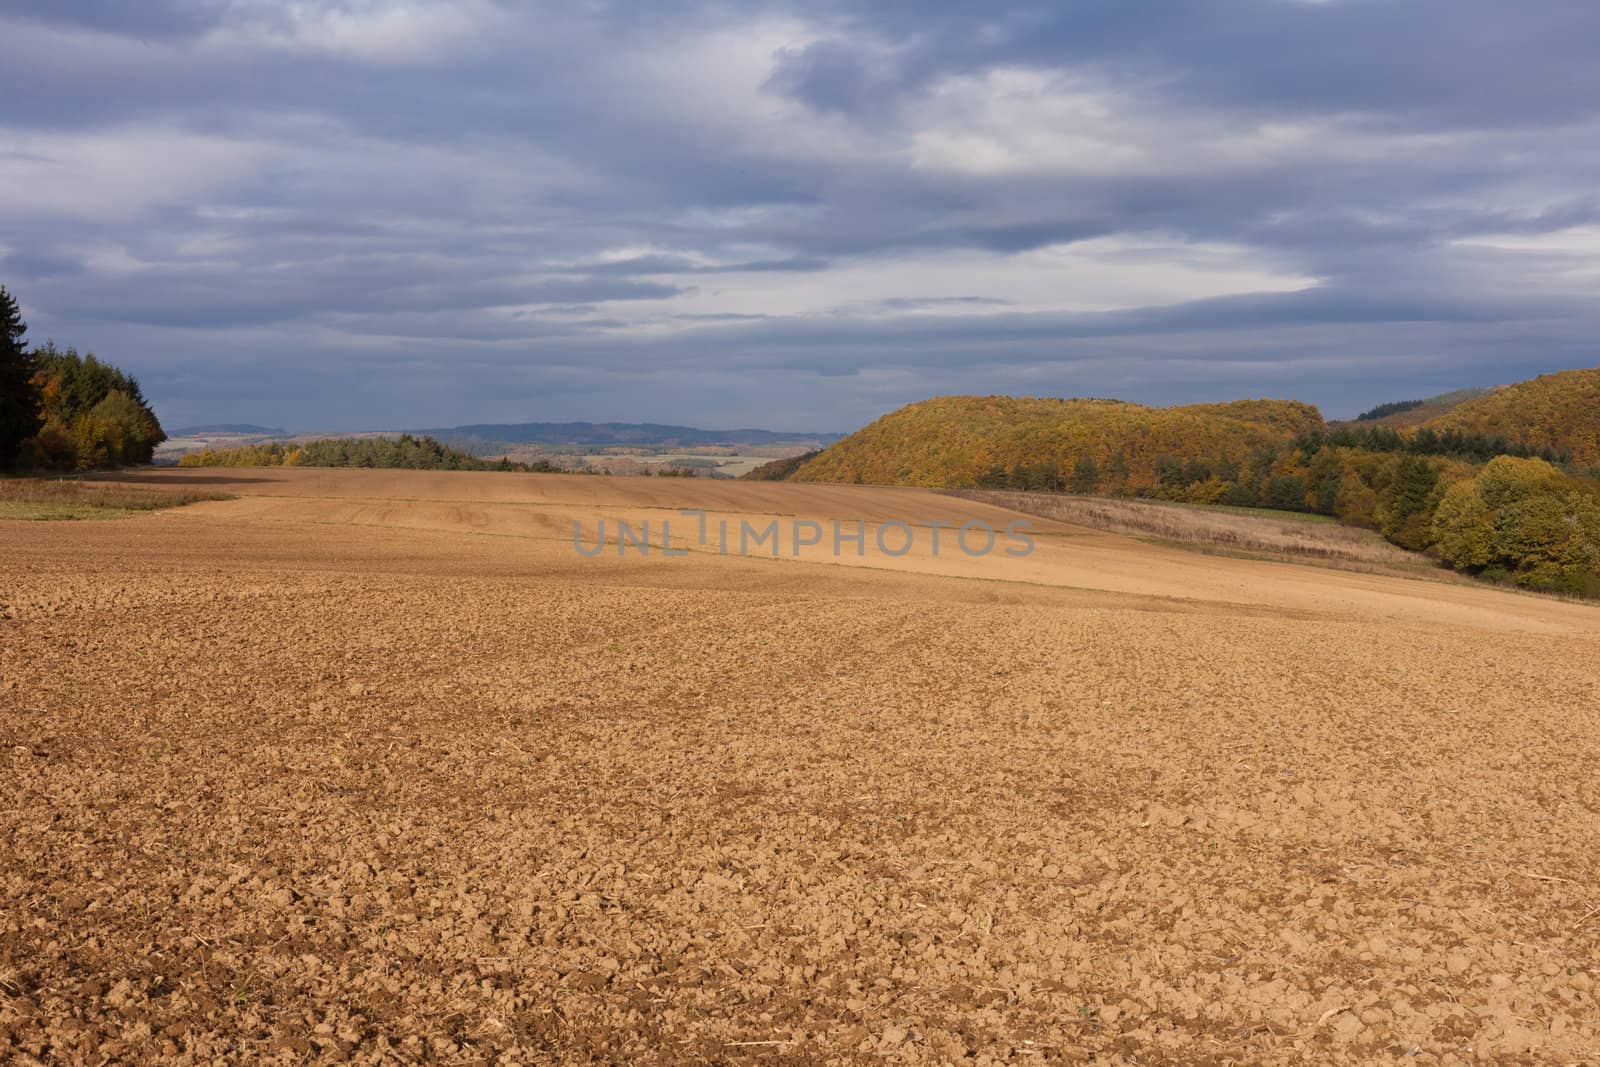 Freshly plowed farmland in Eifel region, Germany, ready for sowing winter grain.